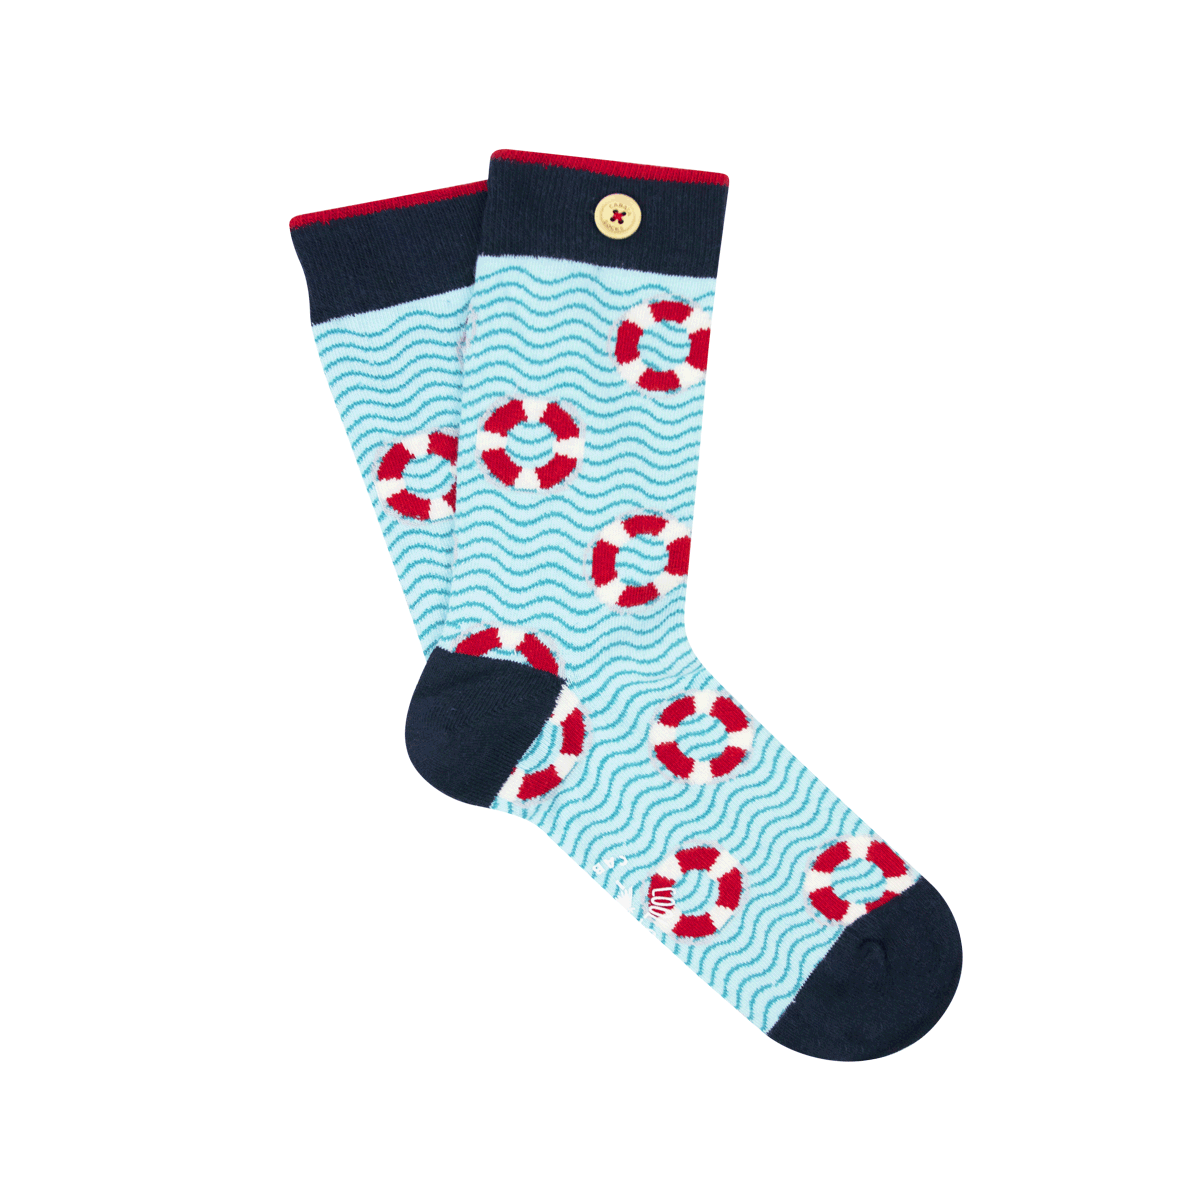 unlosable-socks-wood-button-men-41-46-socks20-vinc-sok-lblue